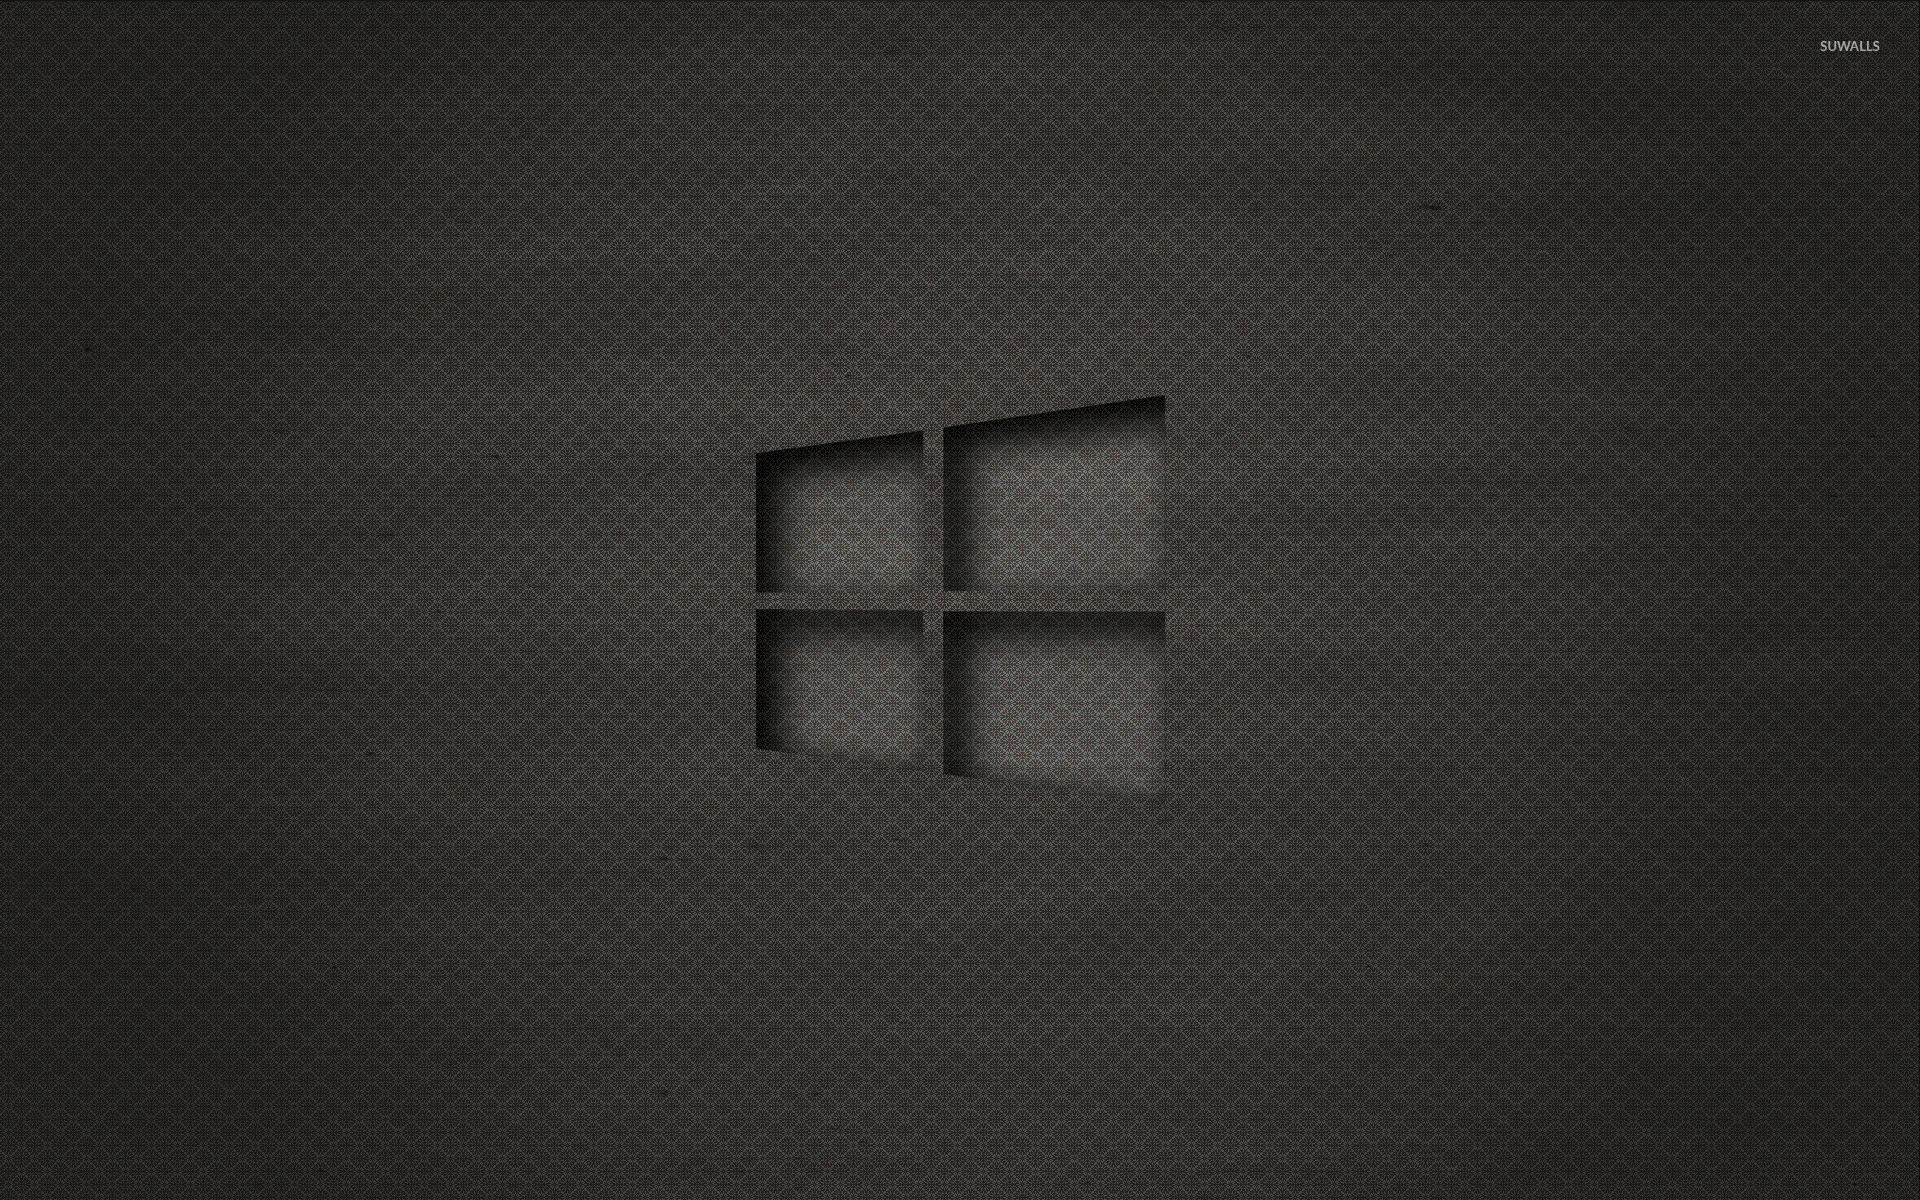 splashtop windows 10 black background